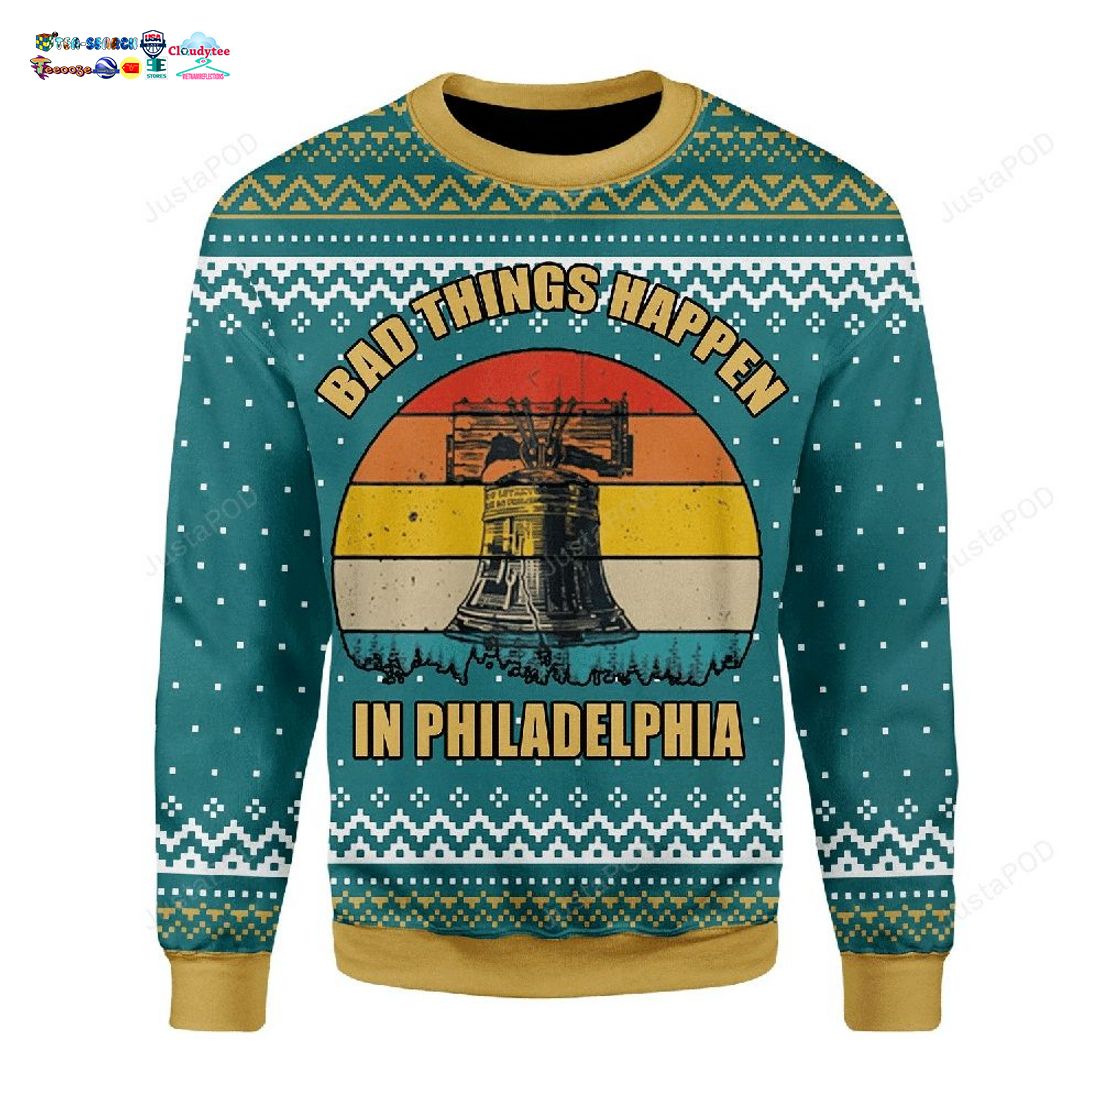 Bad Things Happen In Philadelphia Ugly Christmas Sweater